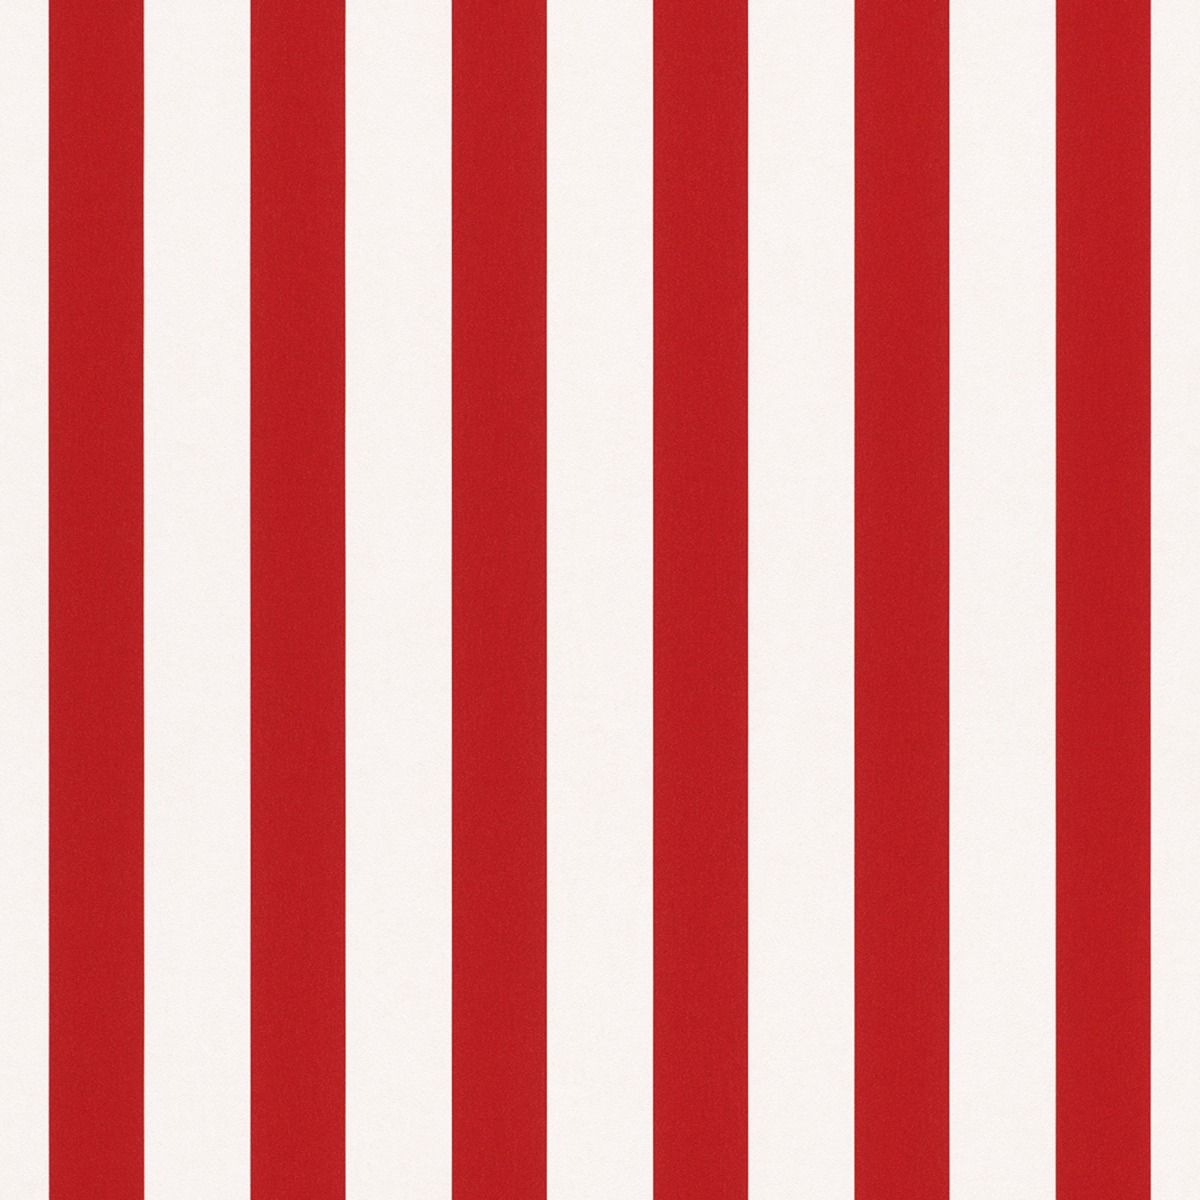 red stripes horizontal